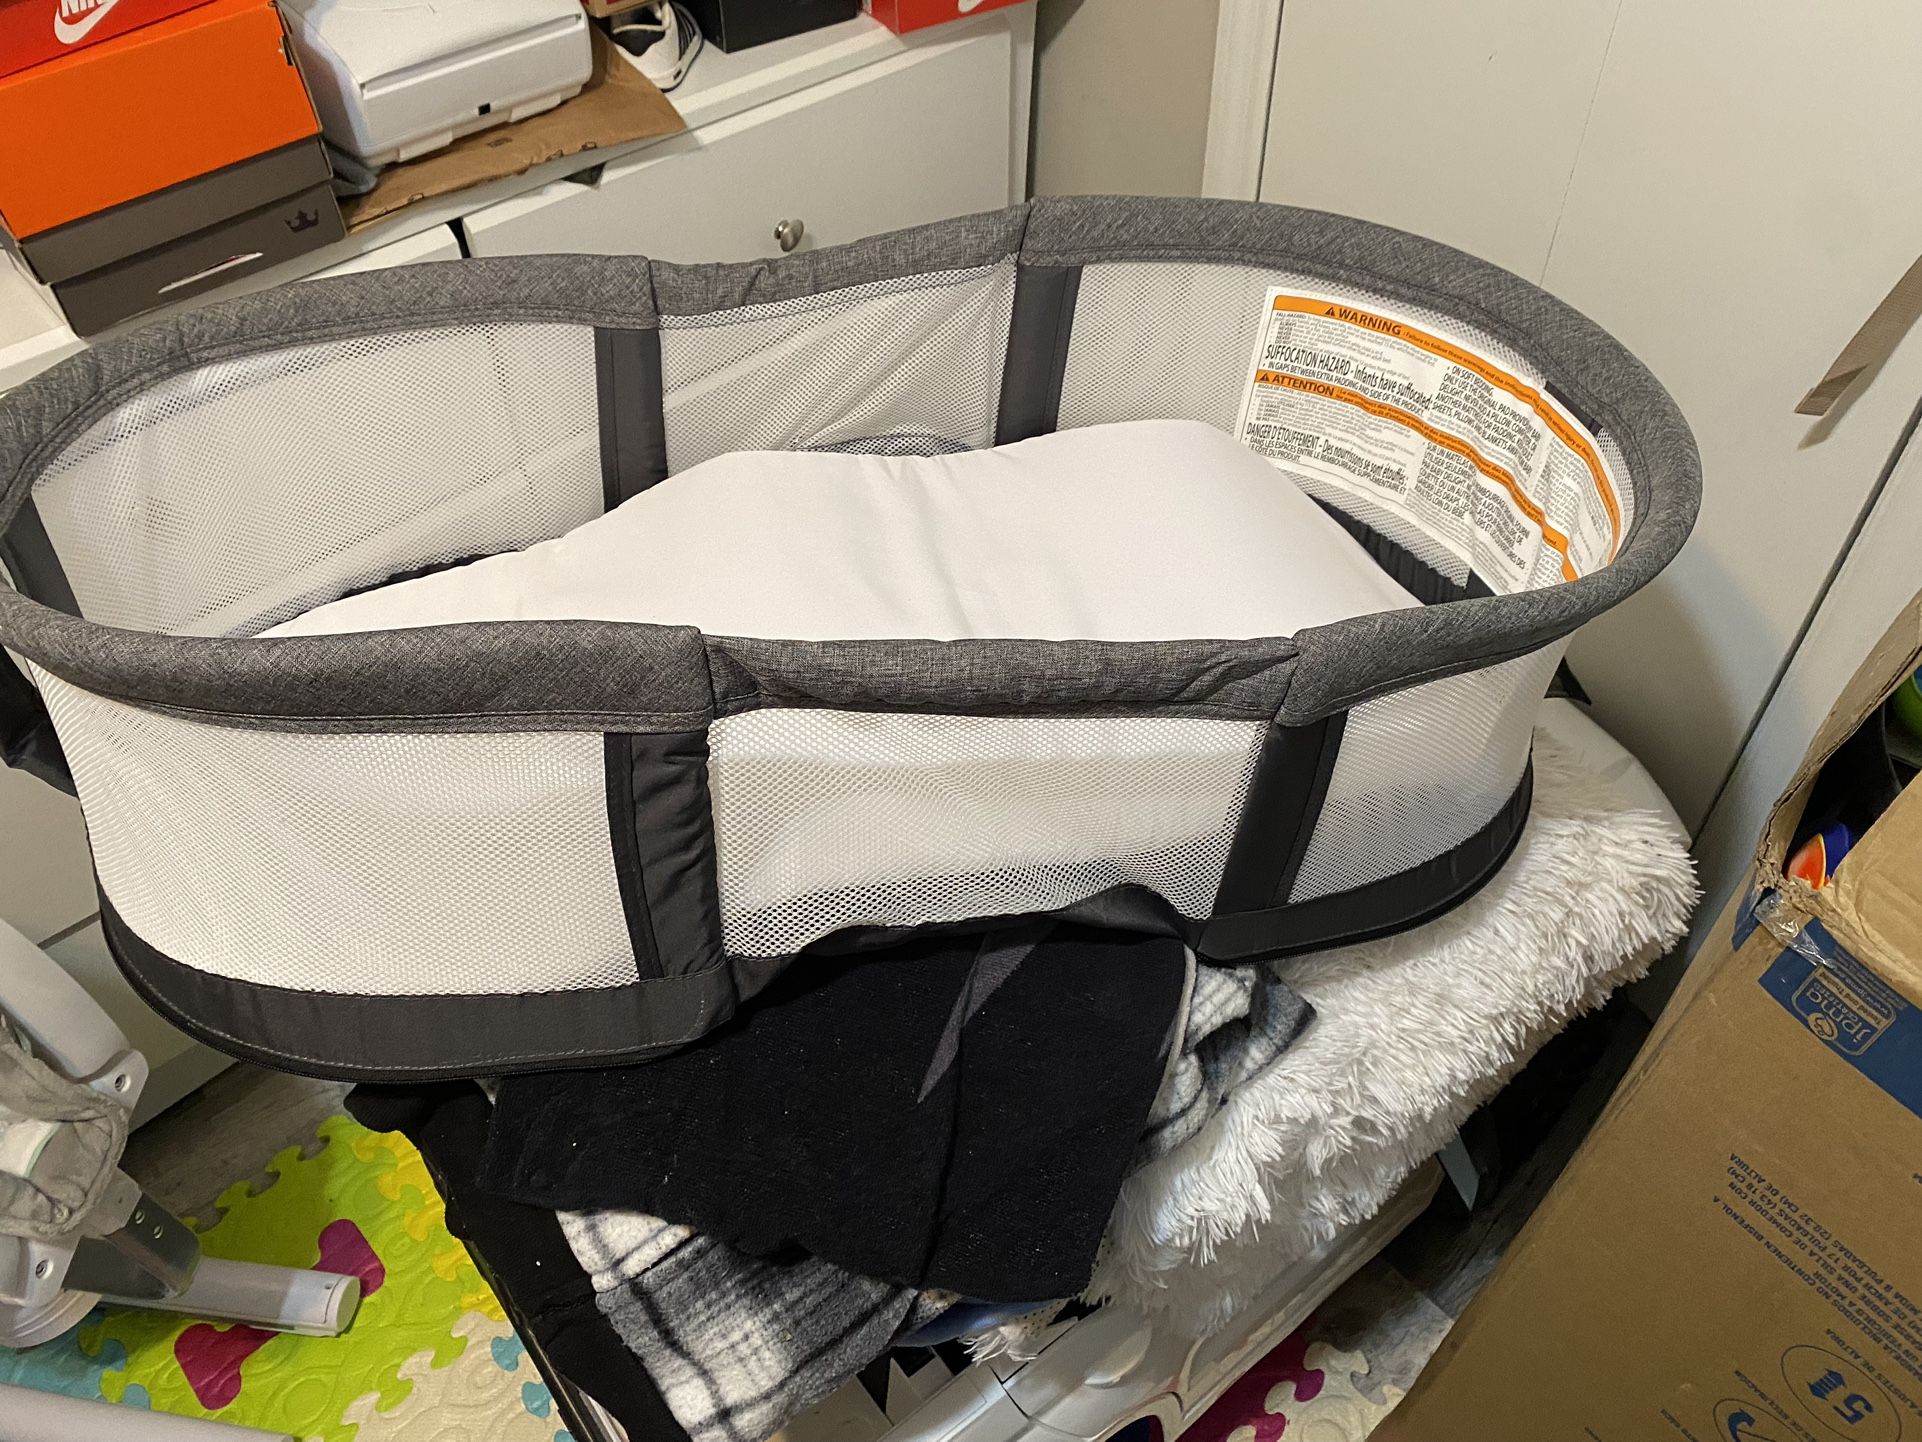 Baby Delight Snuggle Portable bassinet